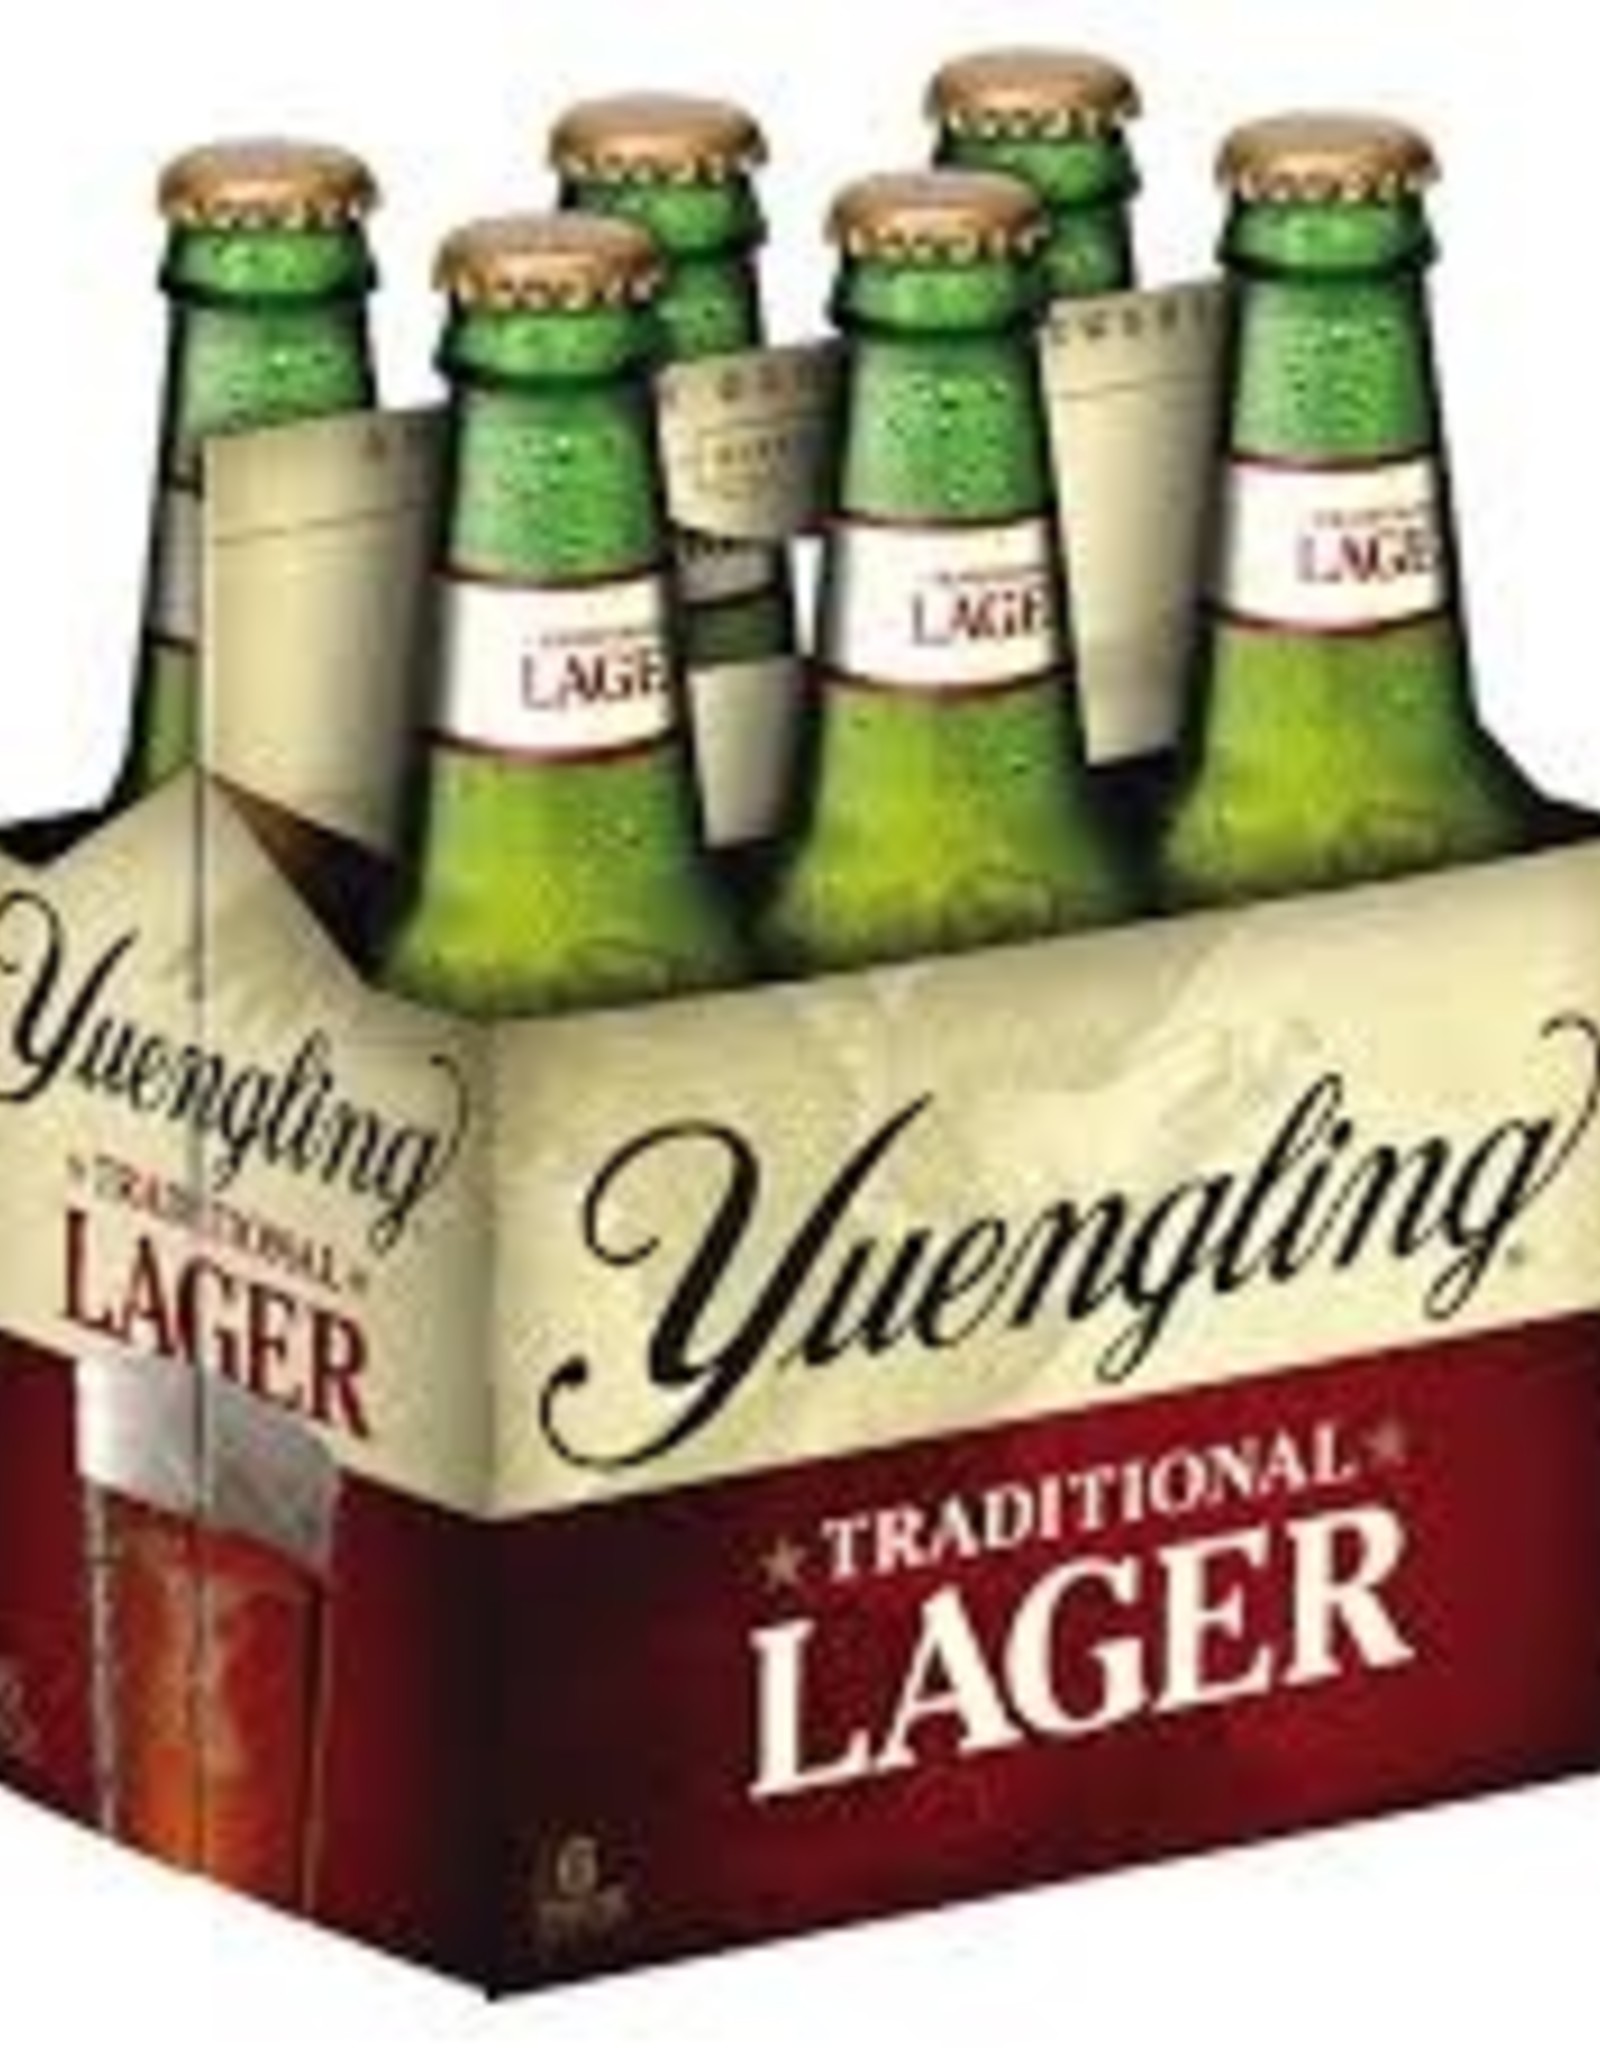 Yuengling Yuengling - Amber - 6pk - 12oz - Bottles